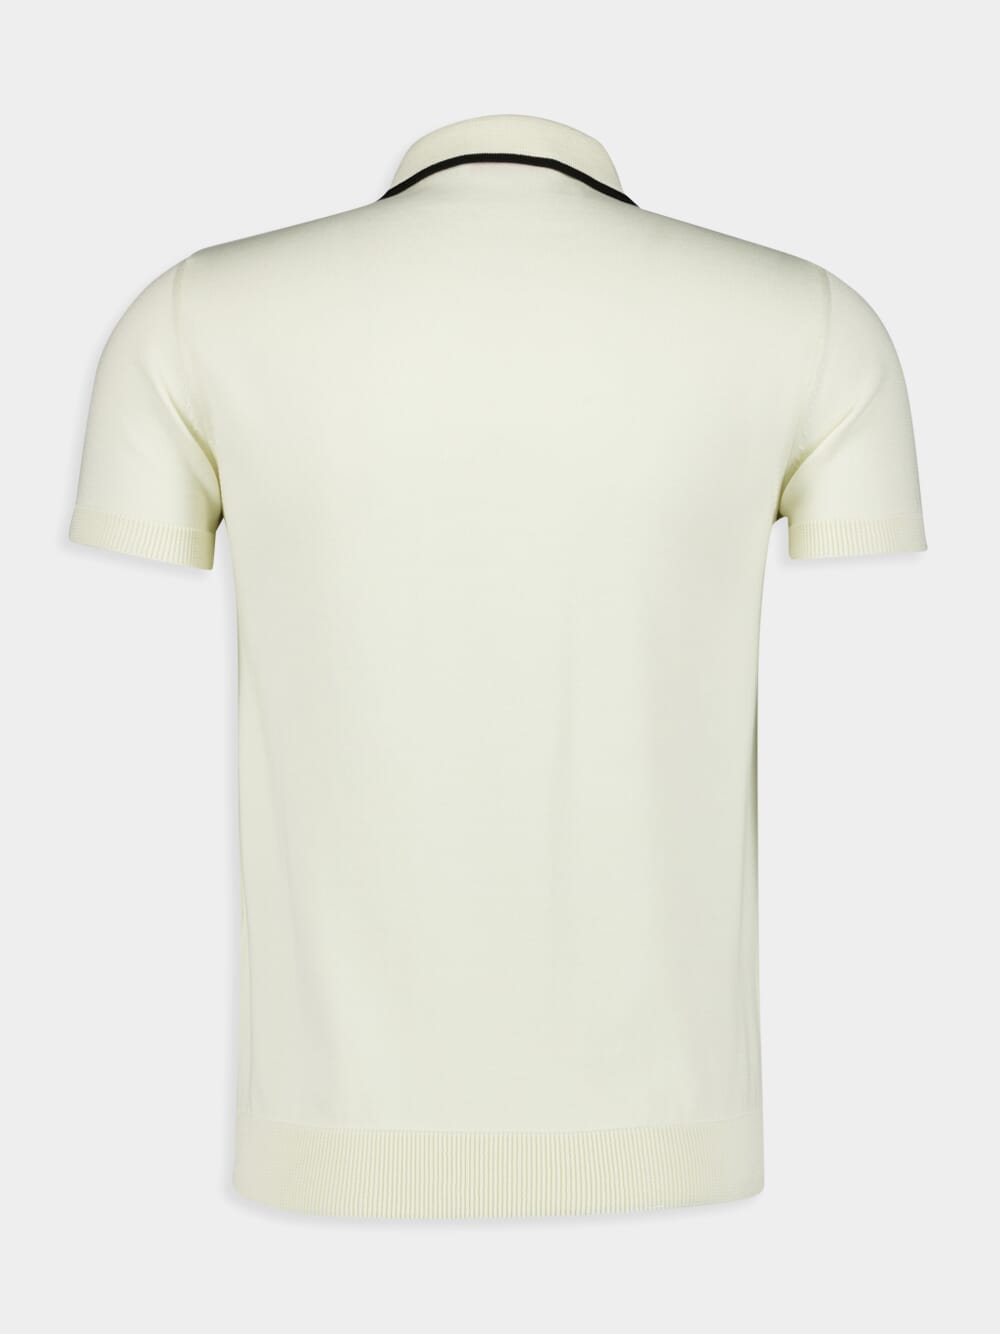 Signature VLogo White Polo Shirt